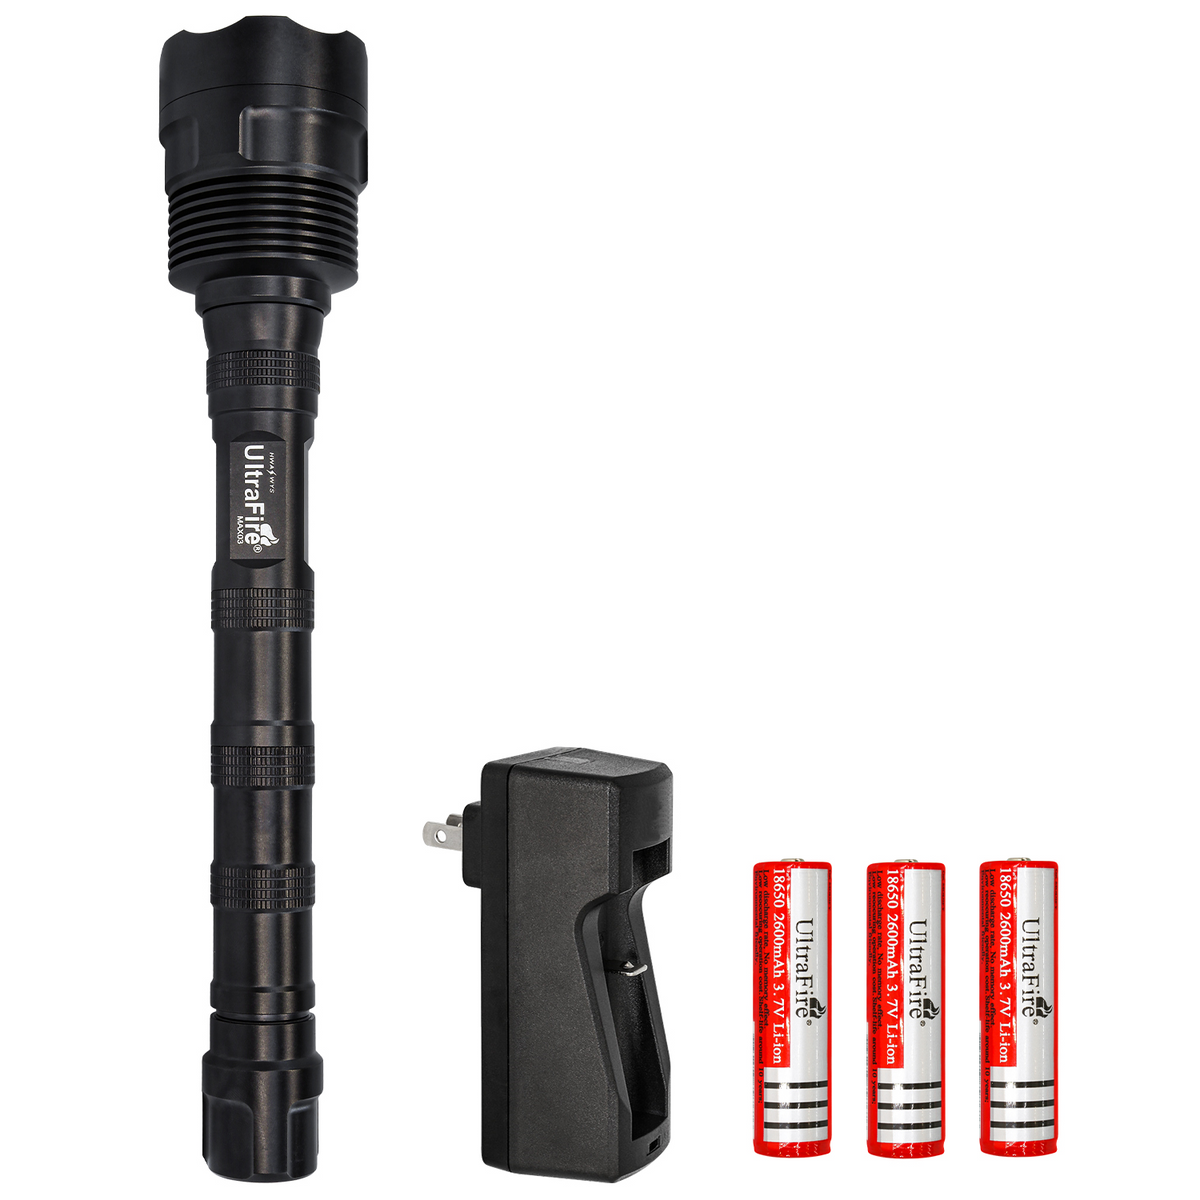 UltraFire Maxter V2 Powerful Flashlight